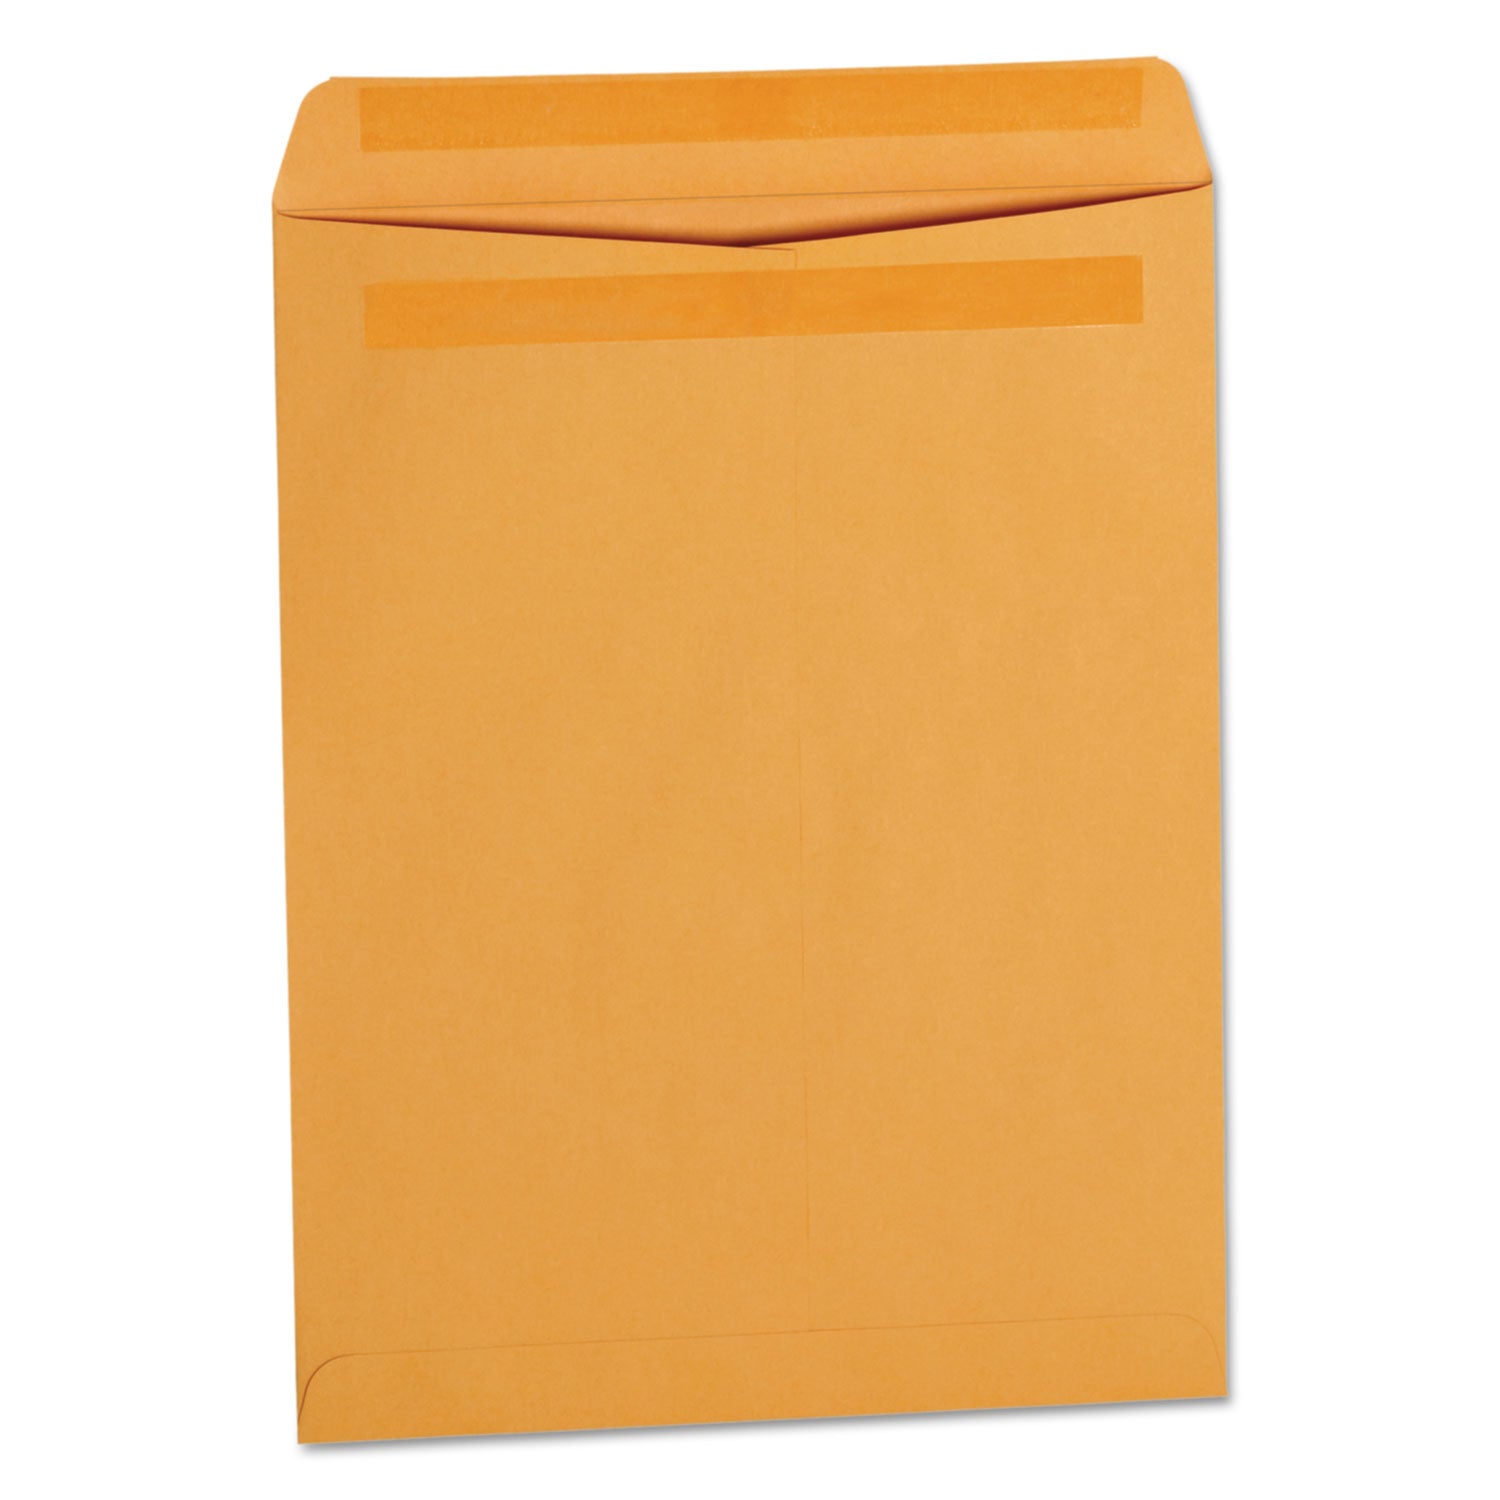 Self-Stick Open End Catalog Envelope, #13 1/2, Square Flap, Self-Adhesive Closure, 10 x 13, Brown Kraft, 250/Box - 